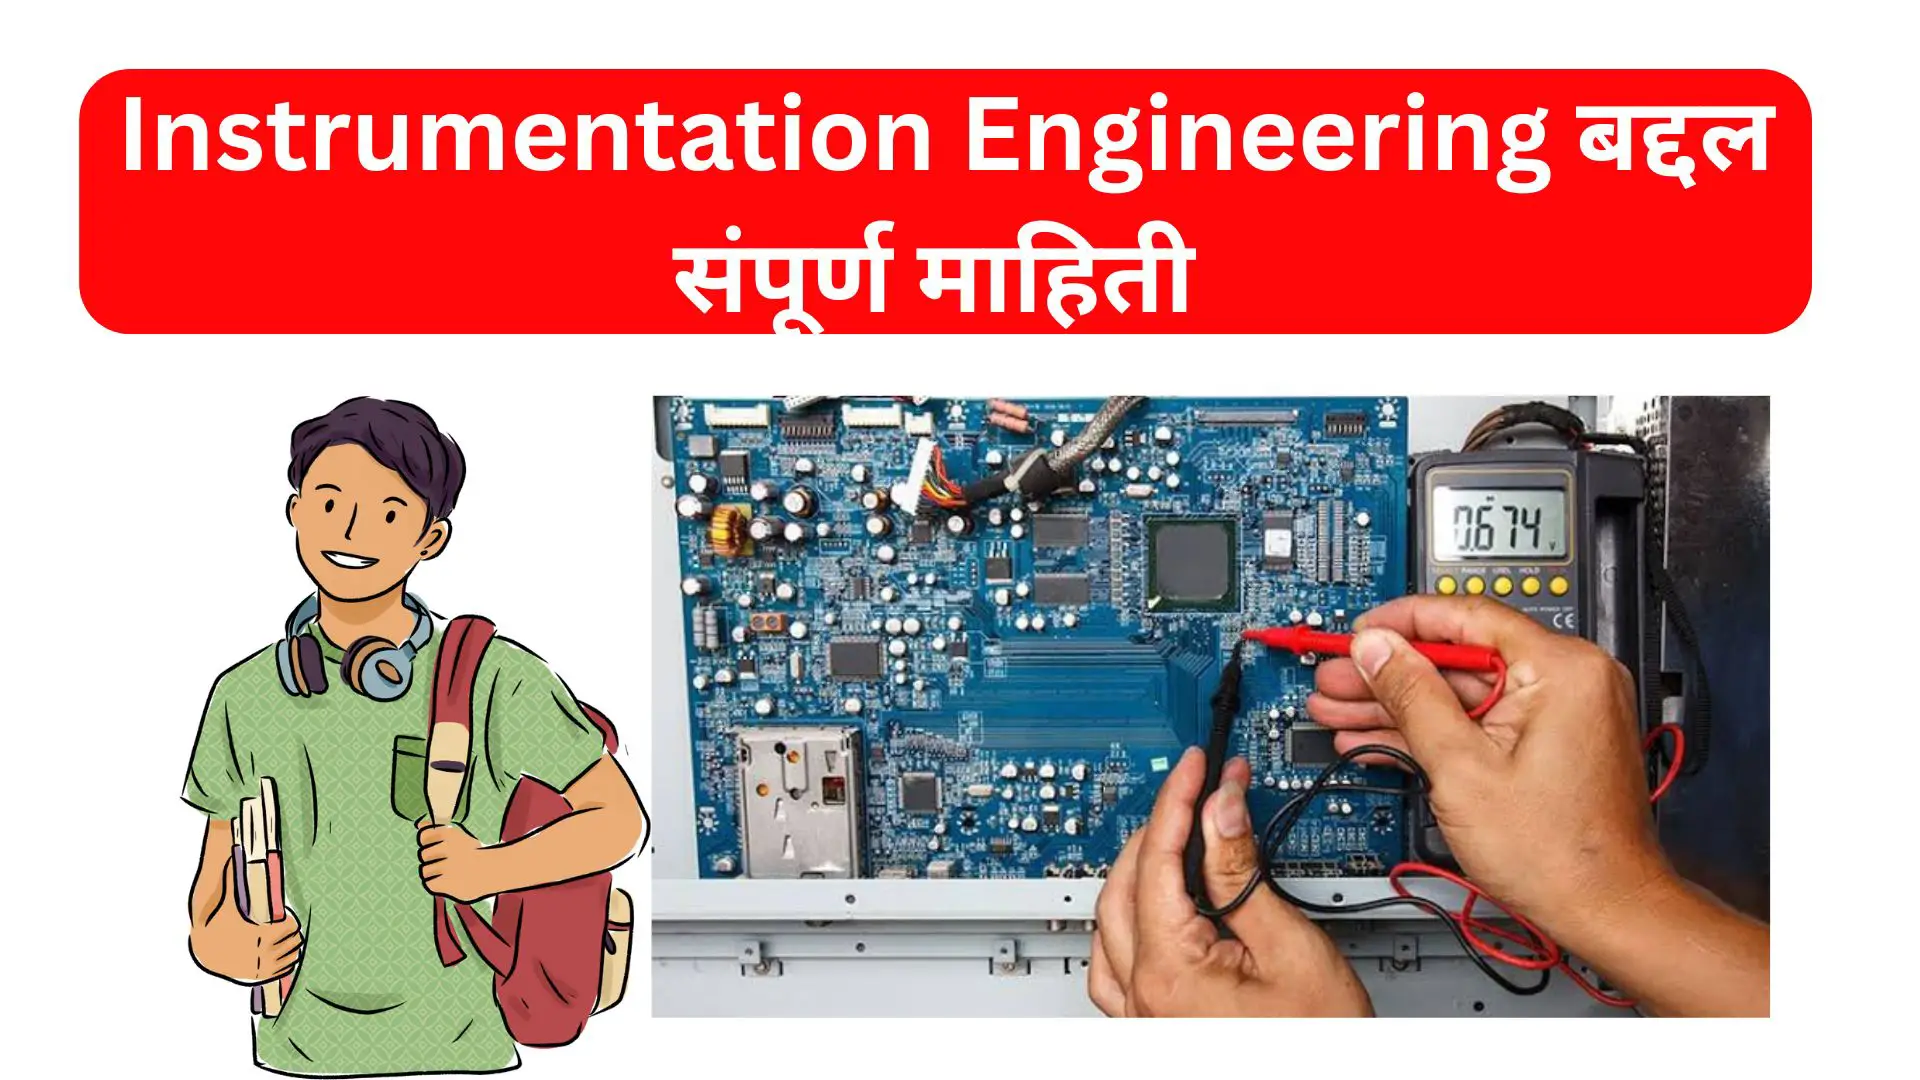 Instrumentation Engineering In Marathi, Career, Salary, Colleges, Qualification In Marathi